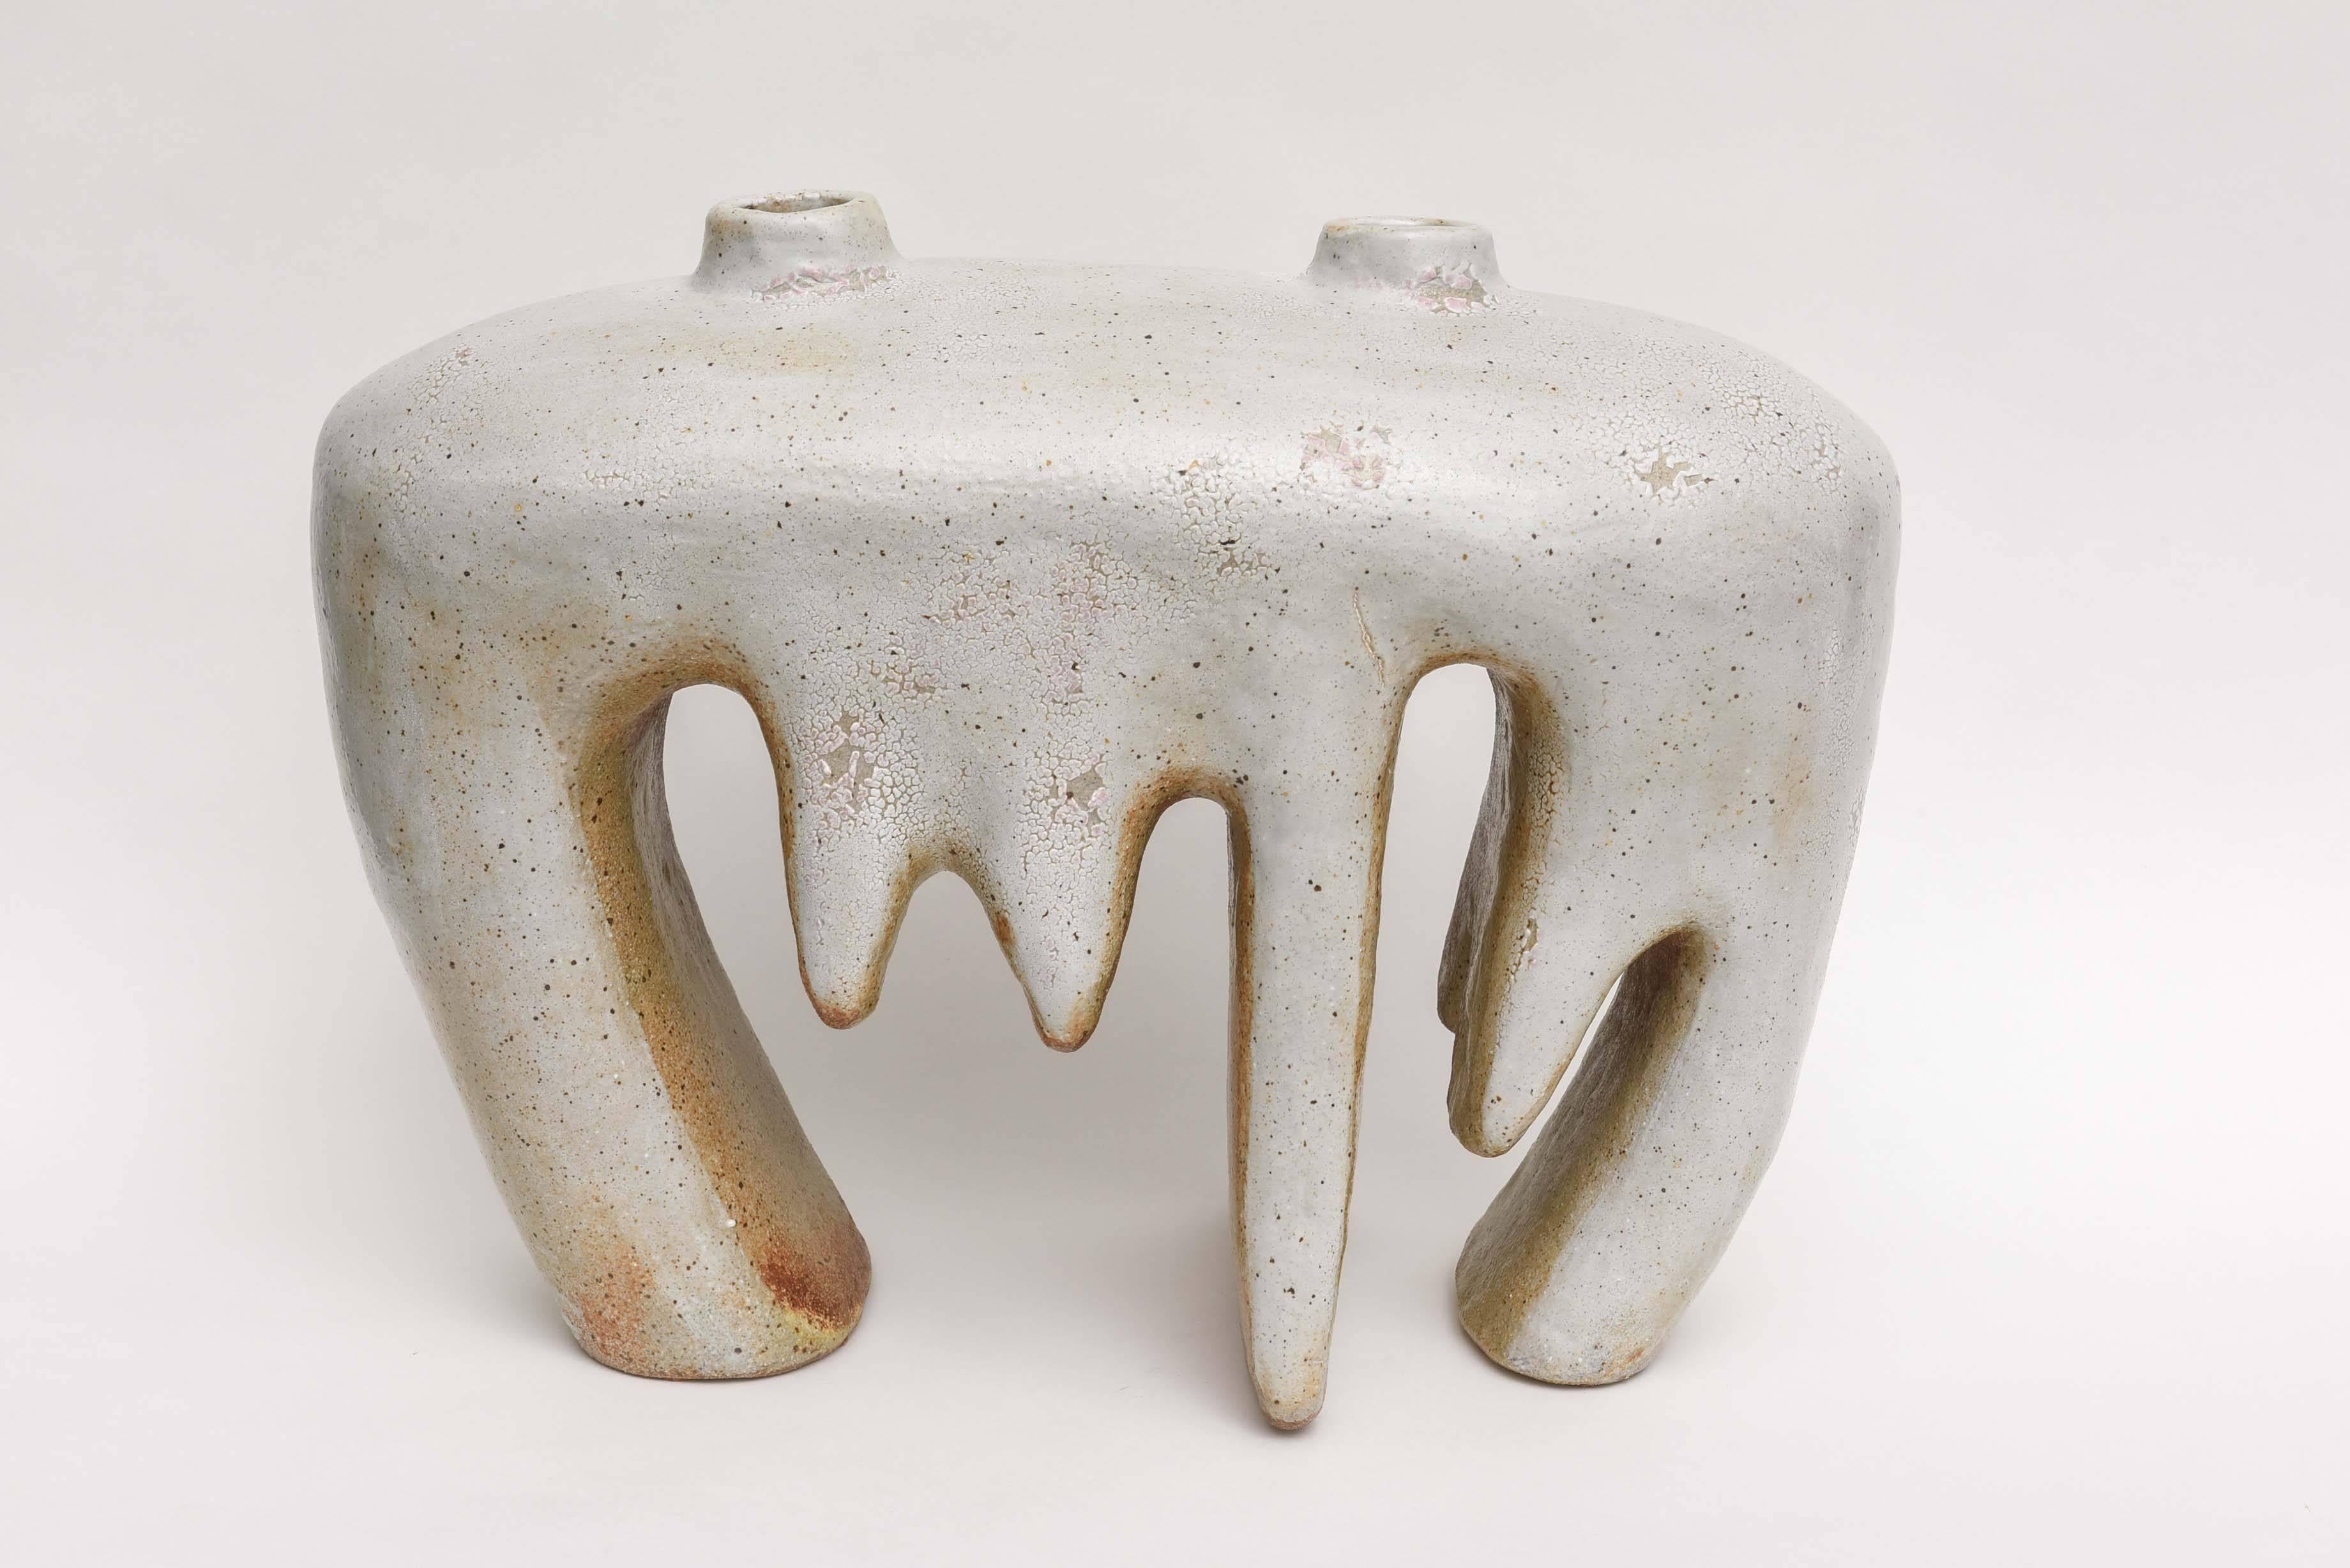 American modern ceramic vase of sculptural form by renowned California artist Daric Harvie.